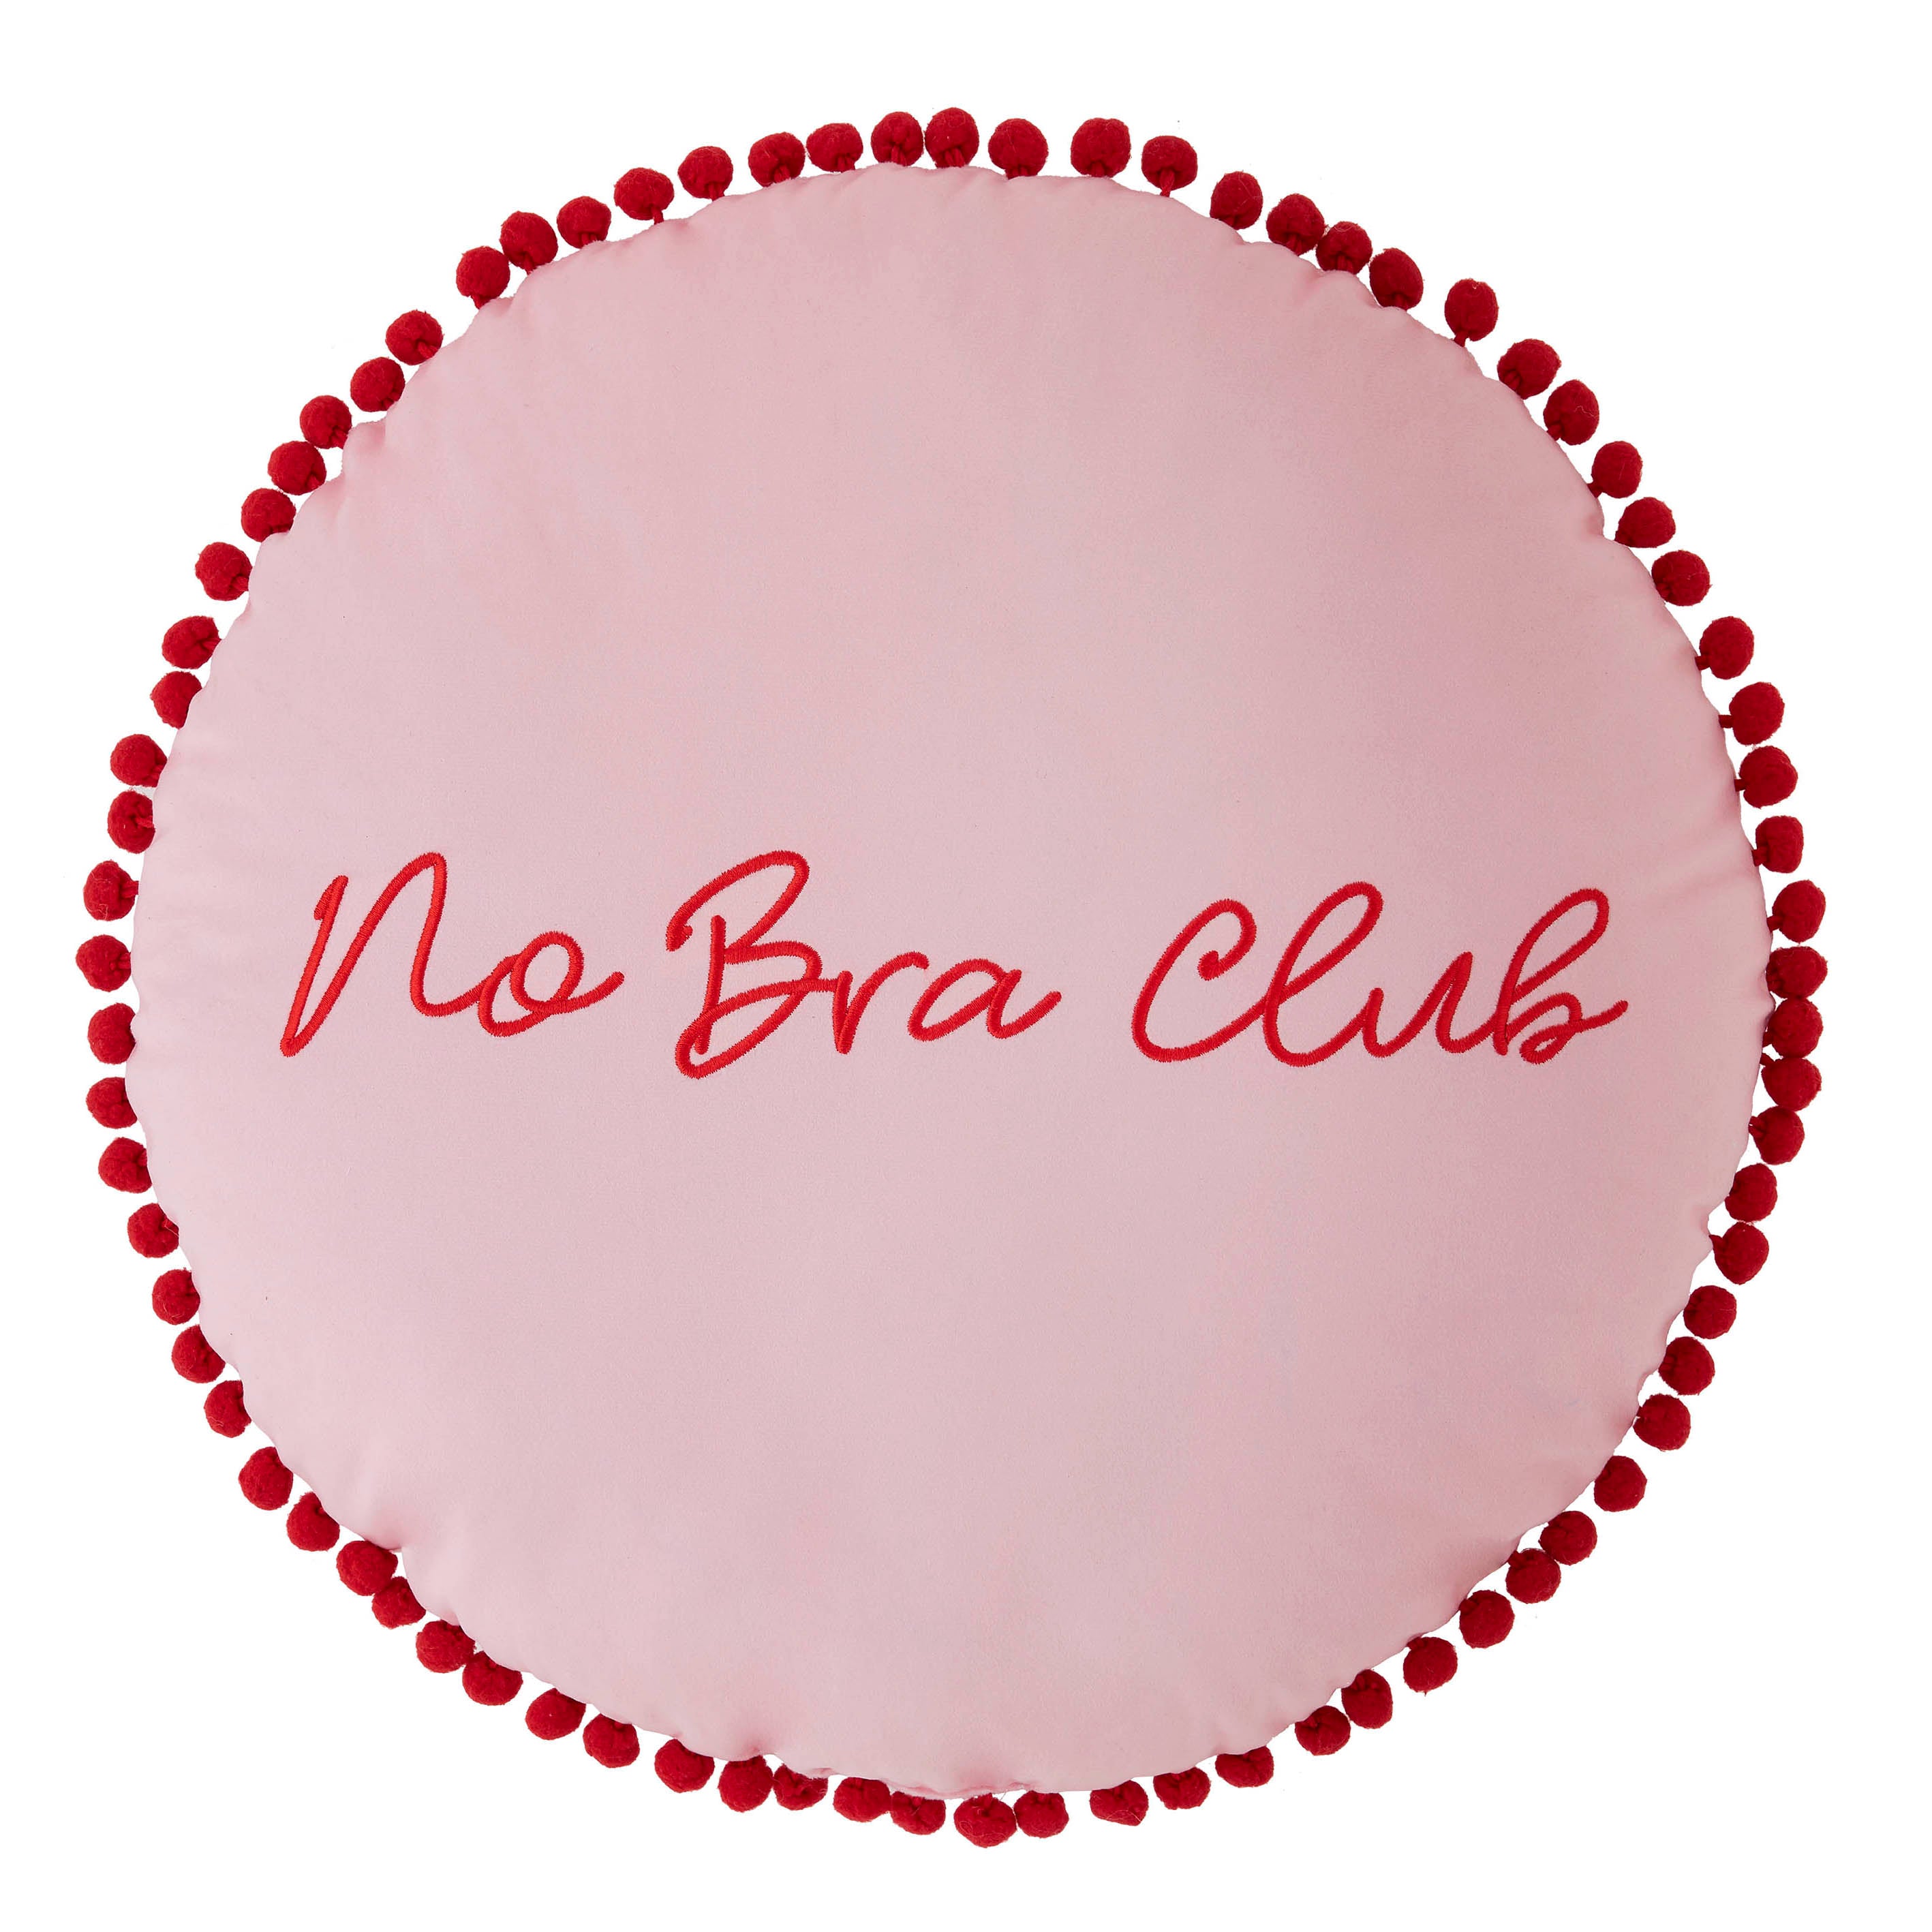 Skinnydip No Bra Club Round Filled Cushion in Pink, 96% Star Rating